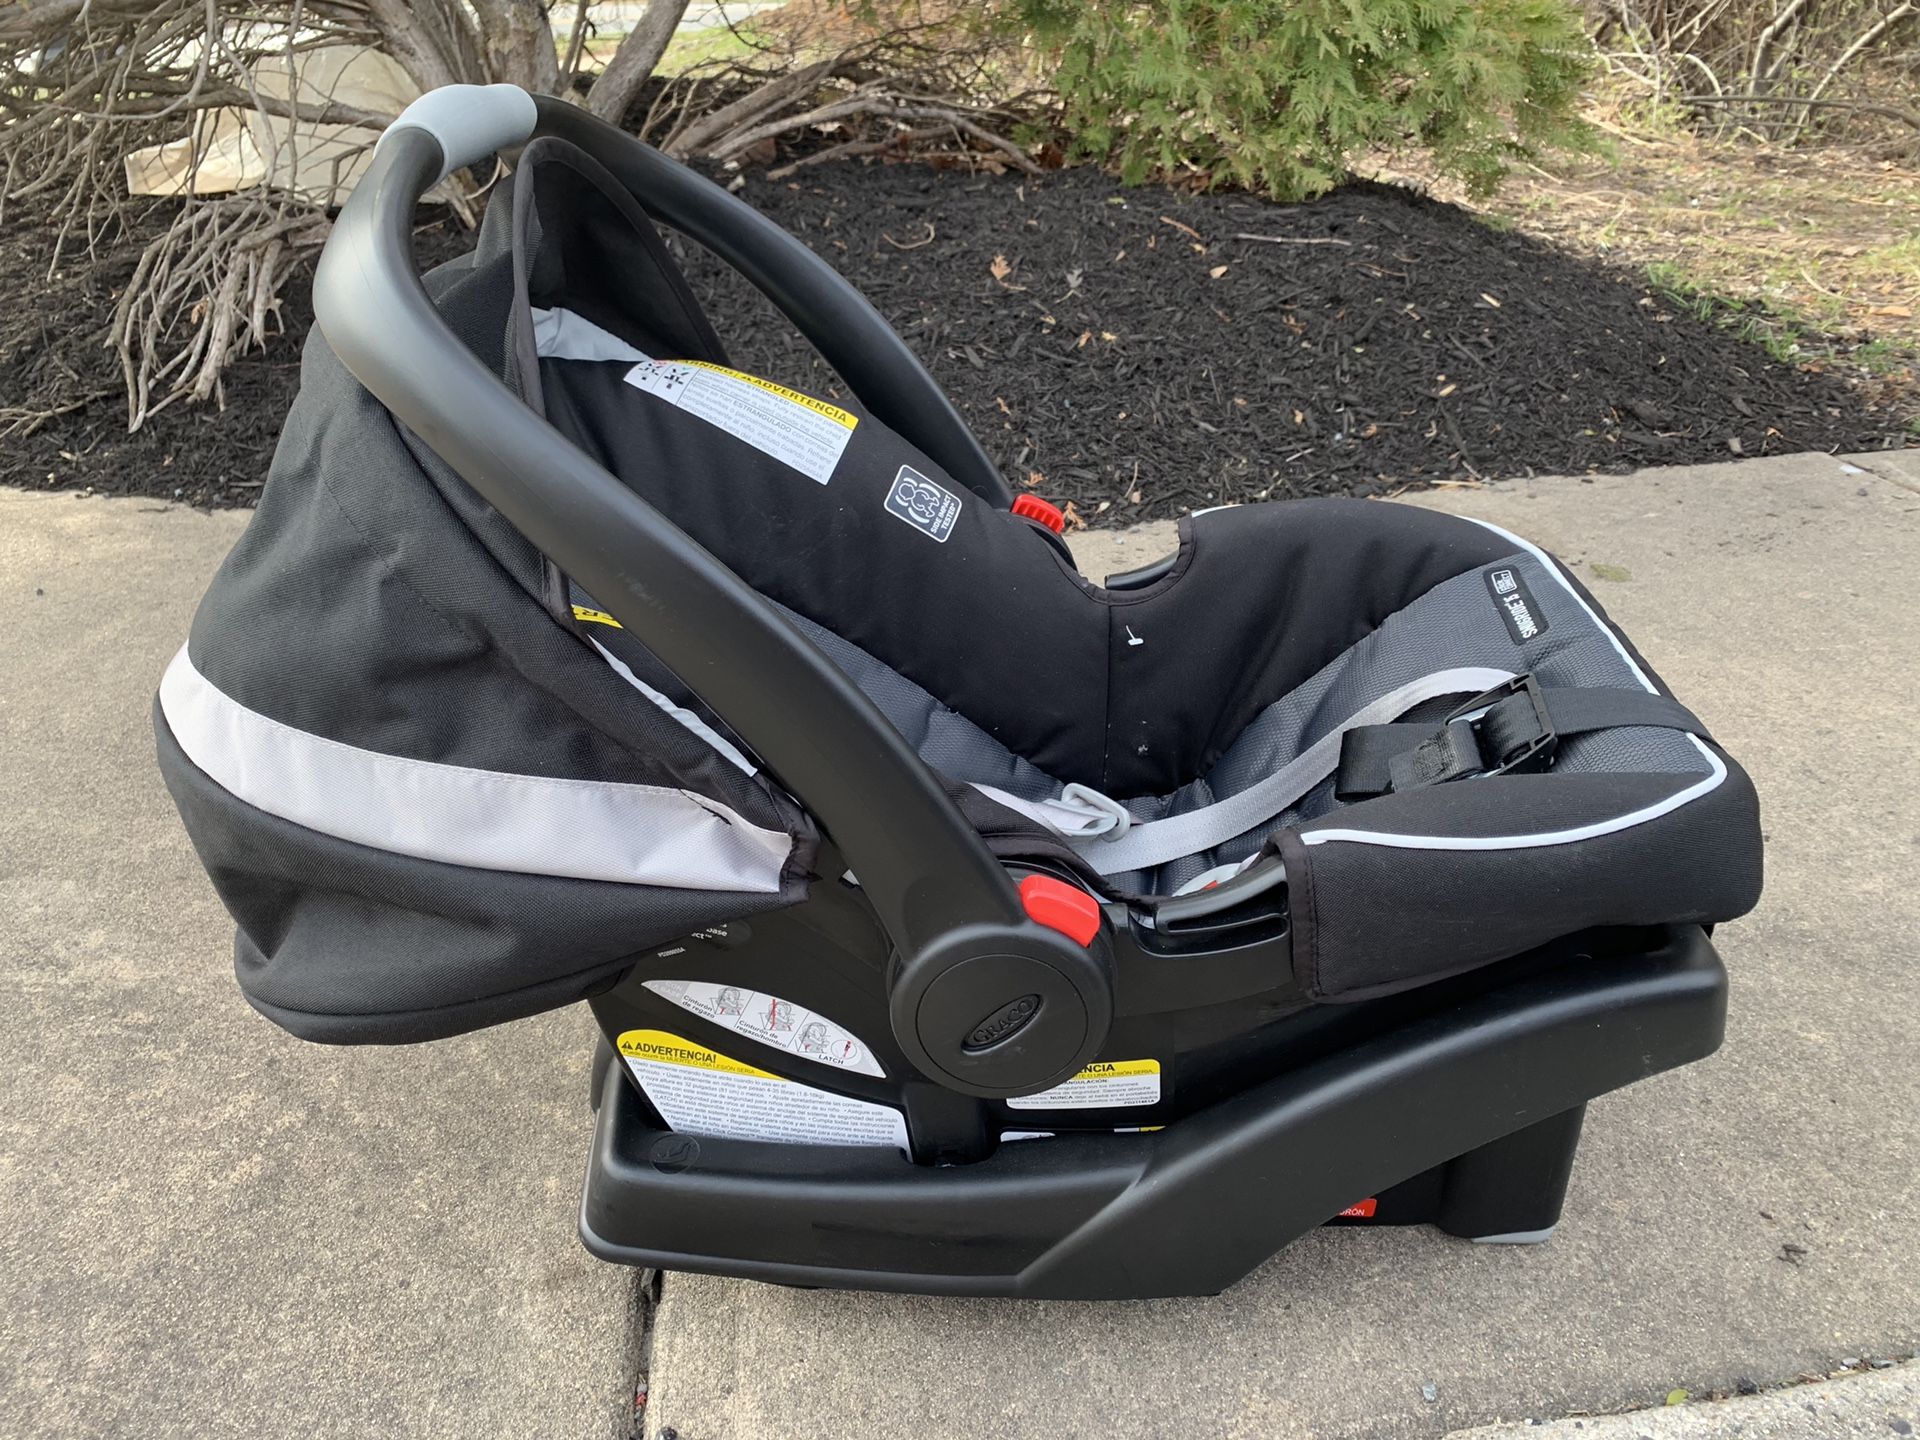 Graco infant car seat w/base (NEW)